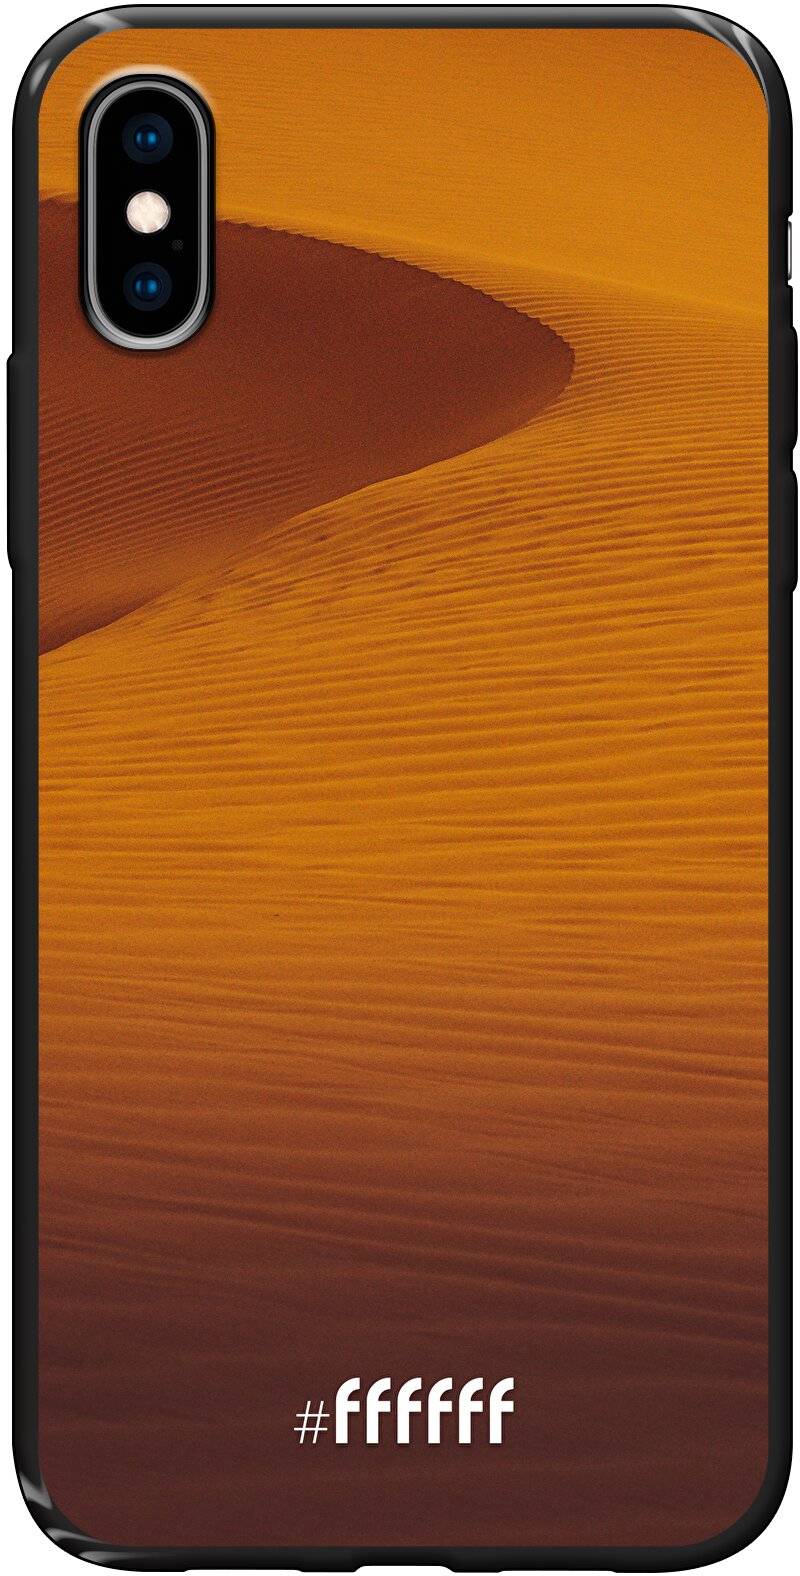 Sand Dunes iPhone X